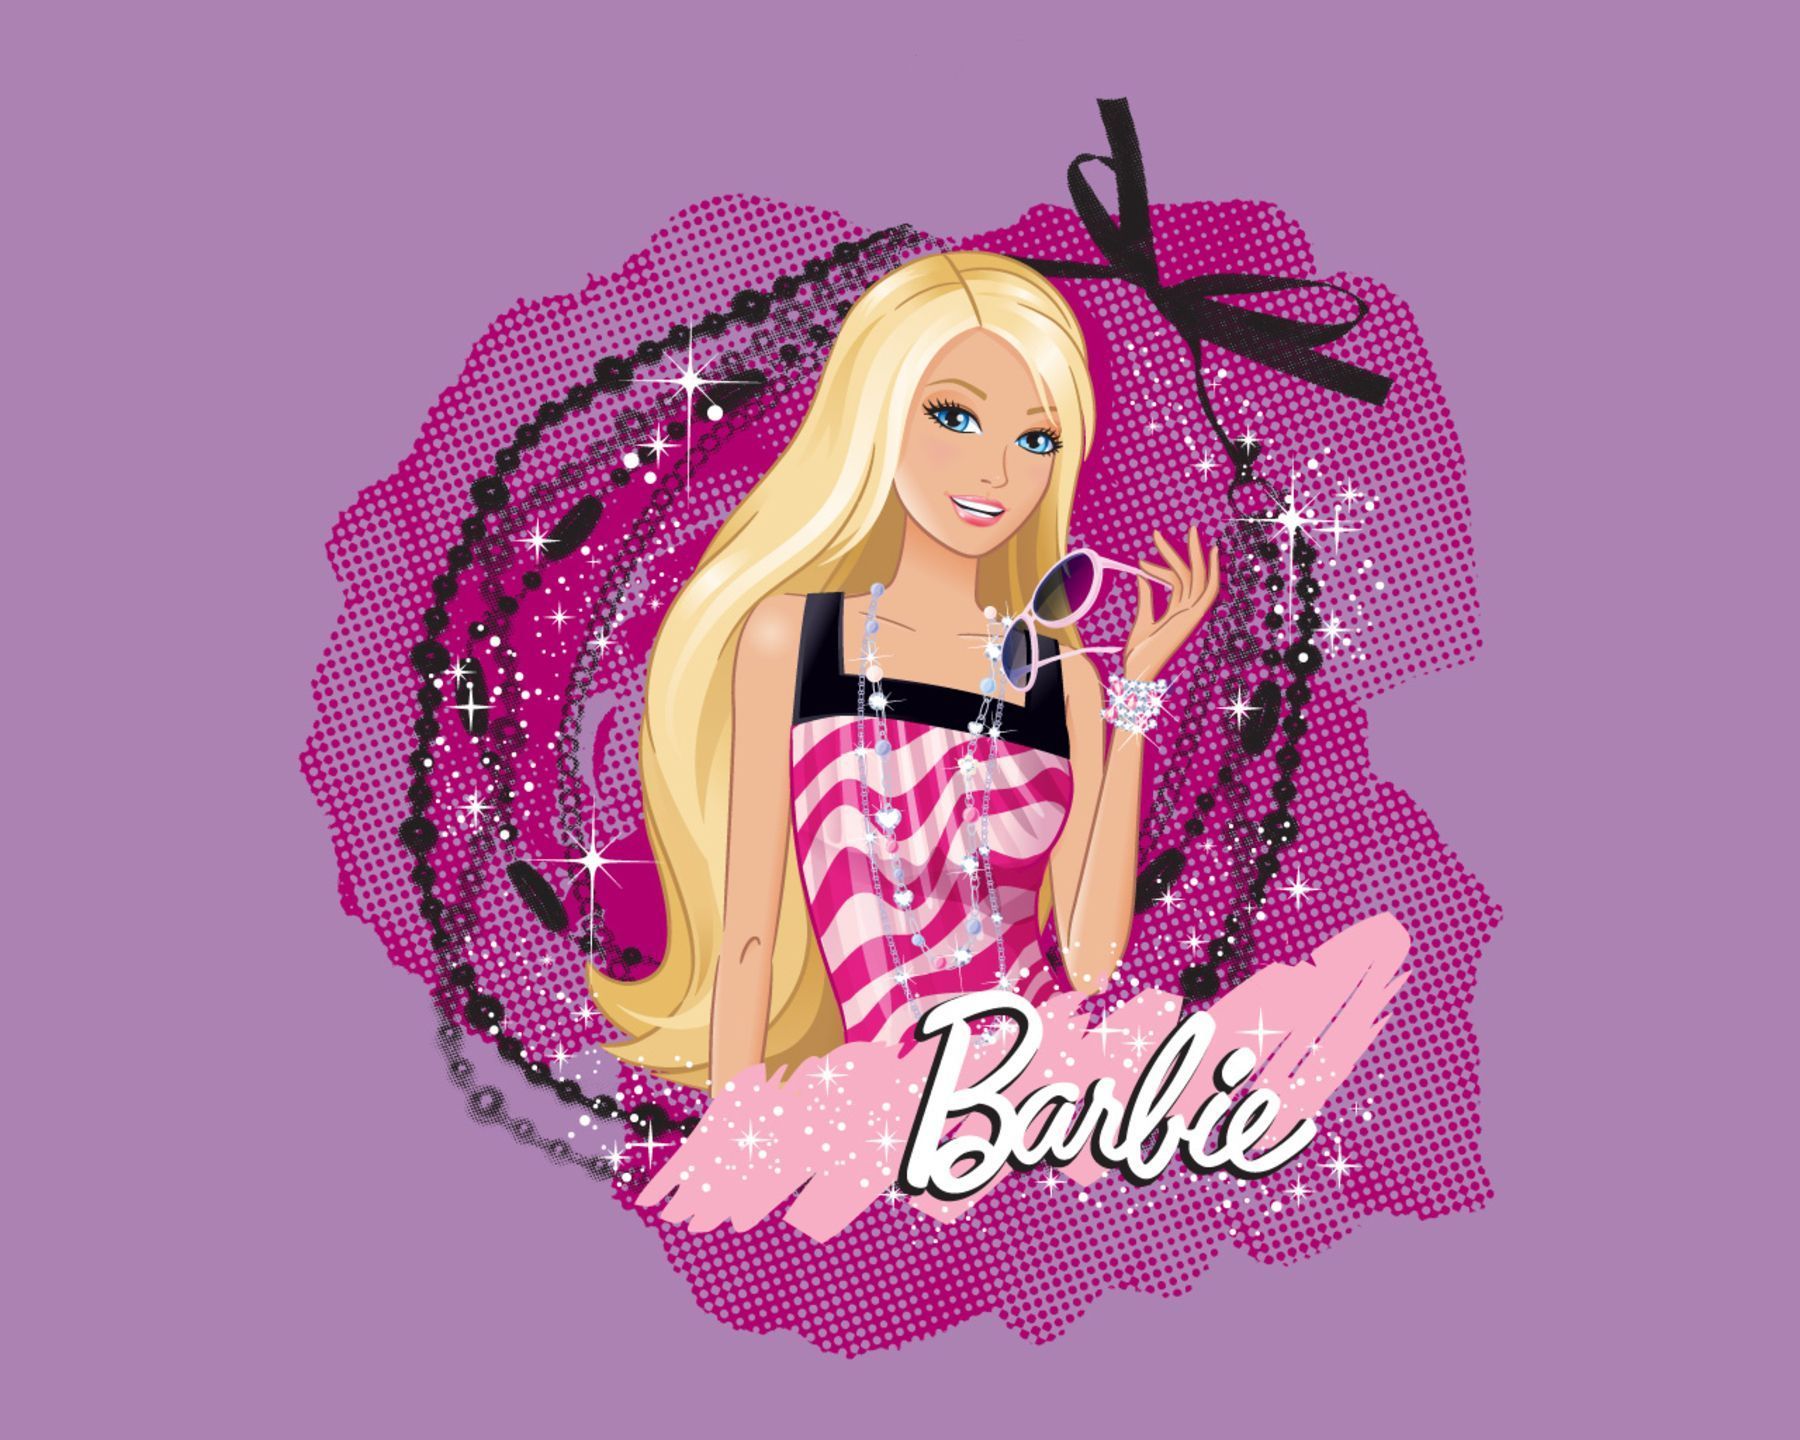 Fondos de pantalla de Barbie - FondosMil